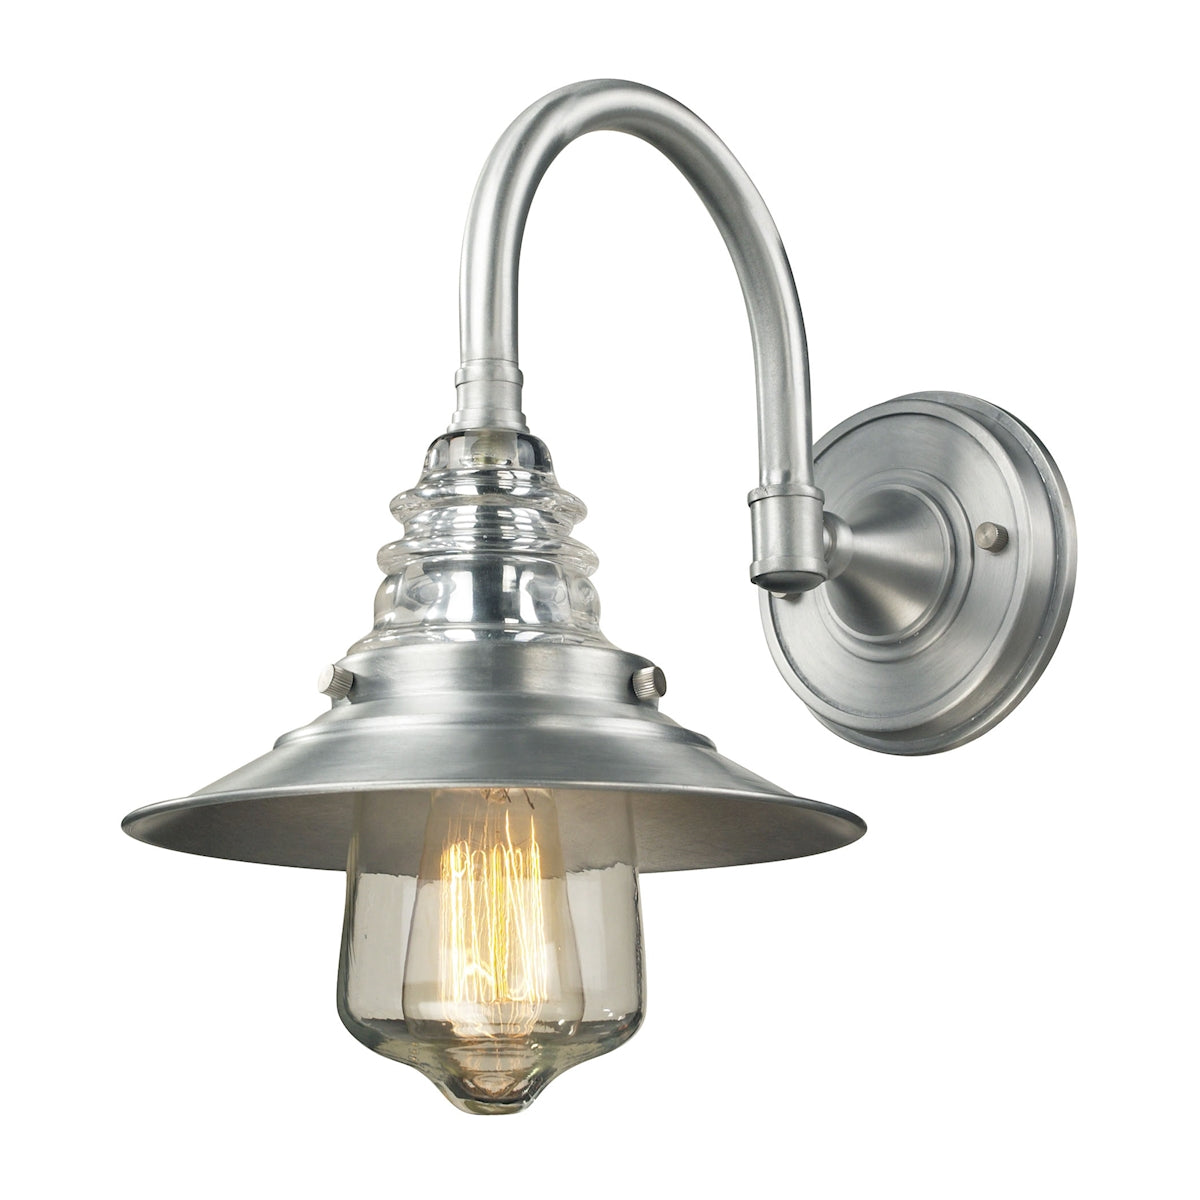 ELK Lighting 66702-1 Insulator Glass 1-Light Outdoor Wall Lamp in Brushed Aluminum